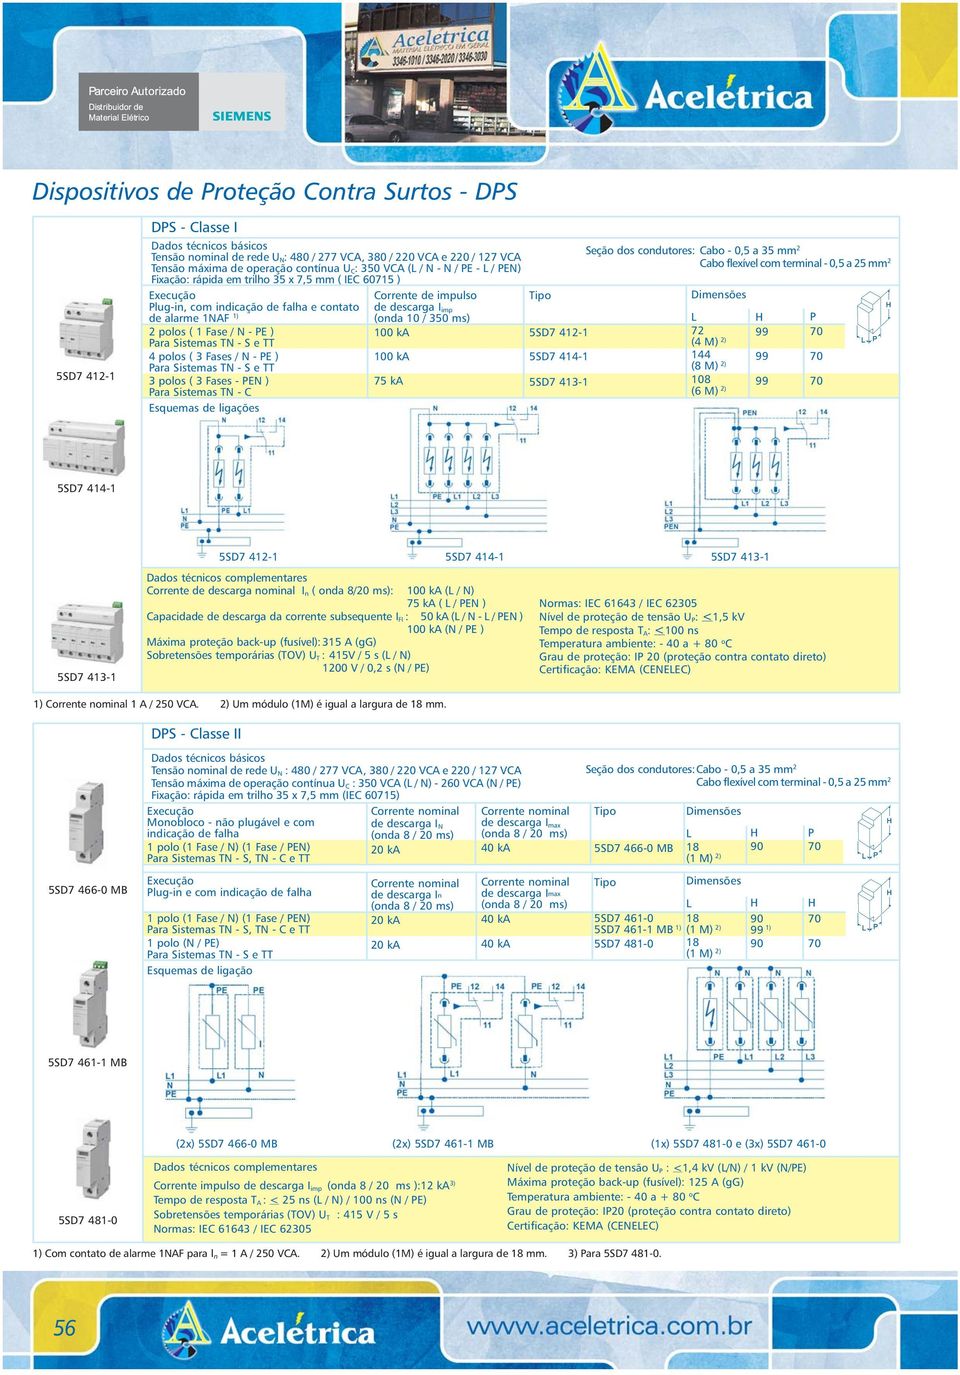 TN - S e TT 4 polos ( 3 Fases / N - PE ) Para Sistemas TN - S e TT 3 polos ( 3 Fases - PEN ) Para Sistemas TN - C Esquemas de ligações Corrente de impulso de descarga I imp (onda 10 / 350 ms) 100 ka